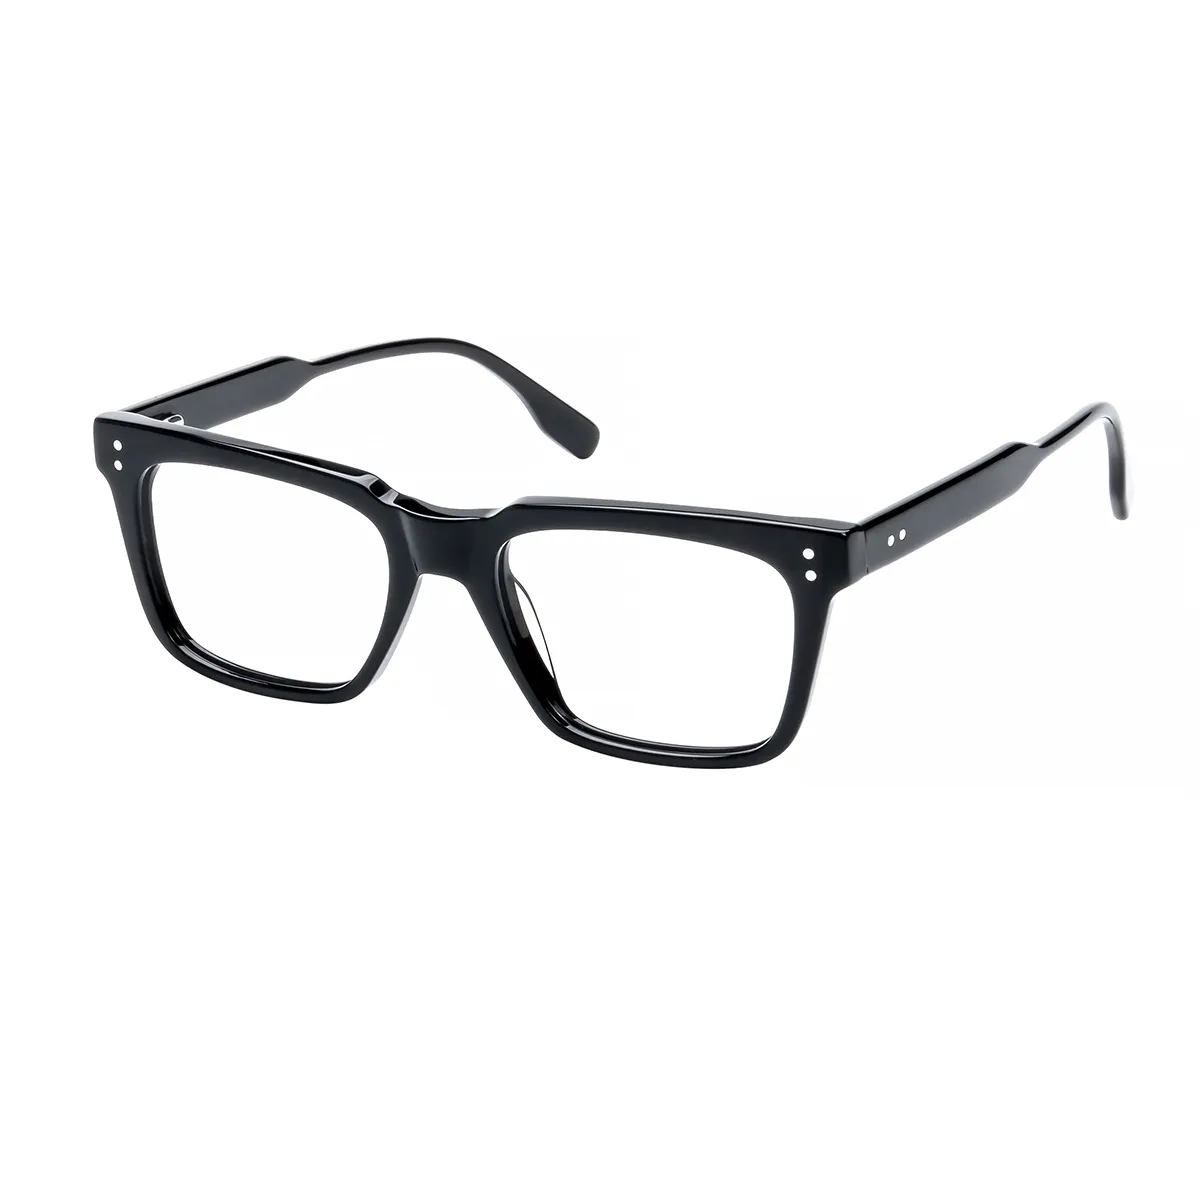 Ruio - Square Black Glasses for Men